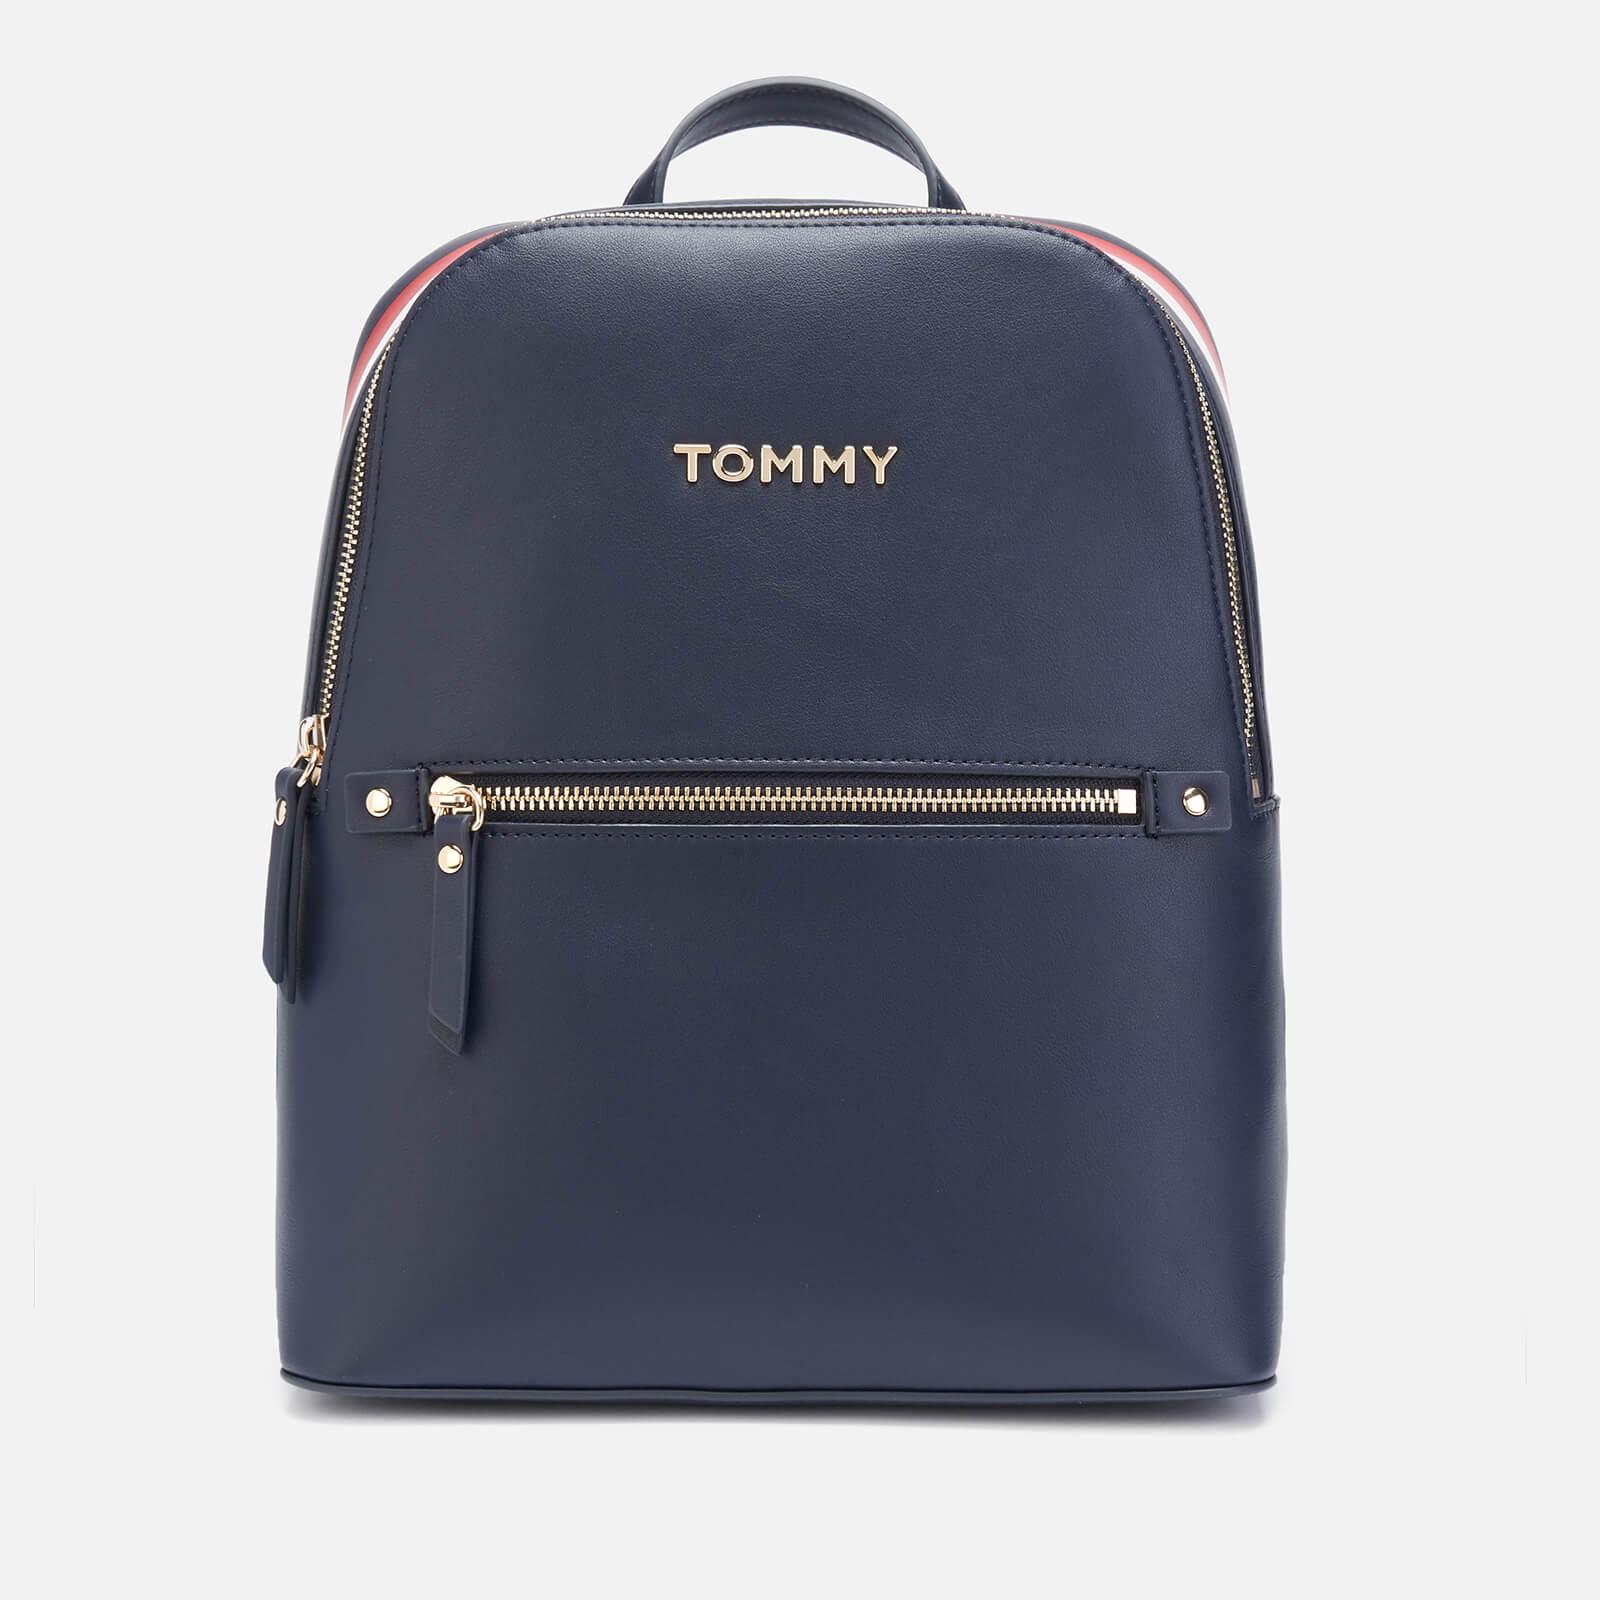 tommy hilfiger backpack for ladies